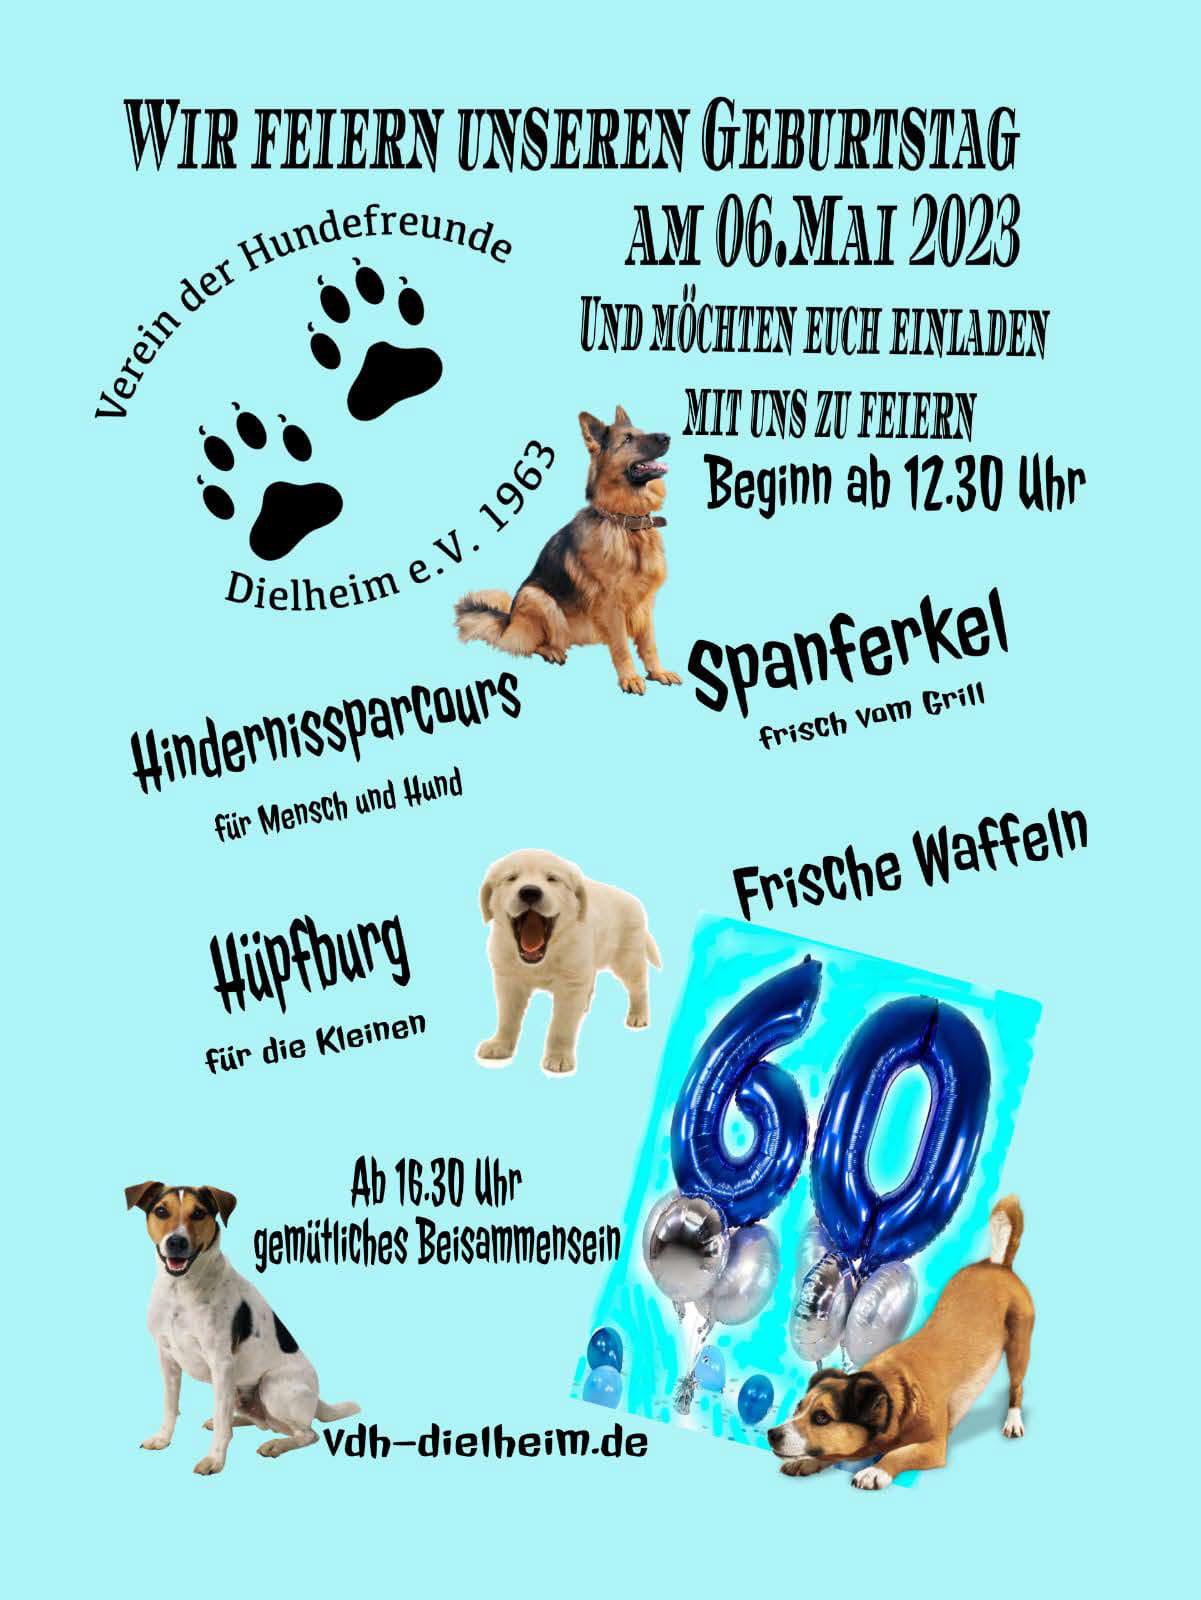 Verein der Hundefreunde Dielheim feiert 60-jähriges Bestehen